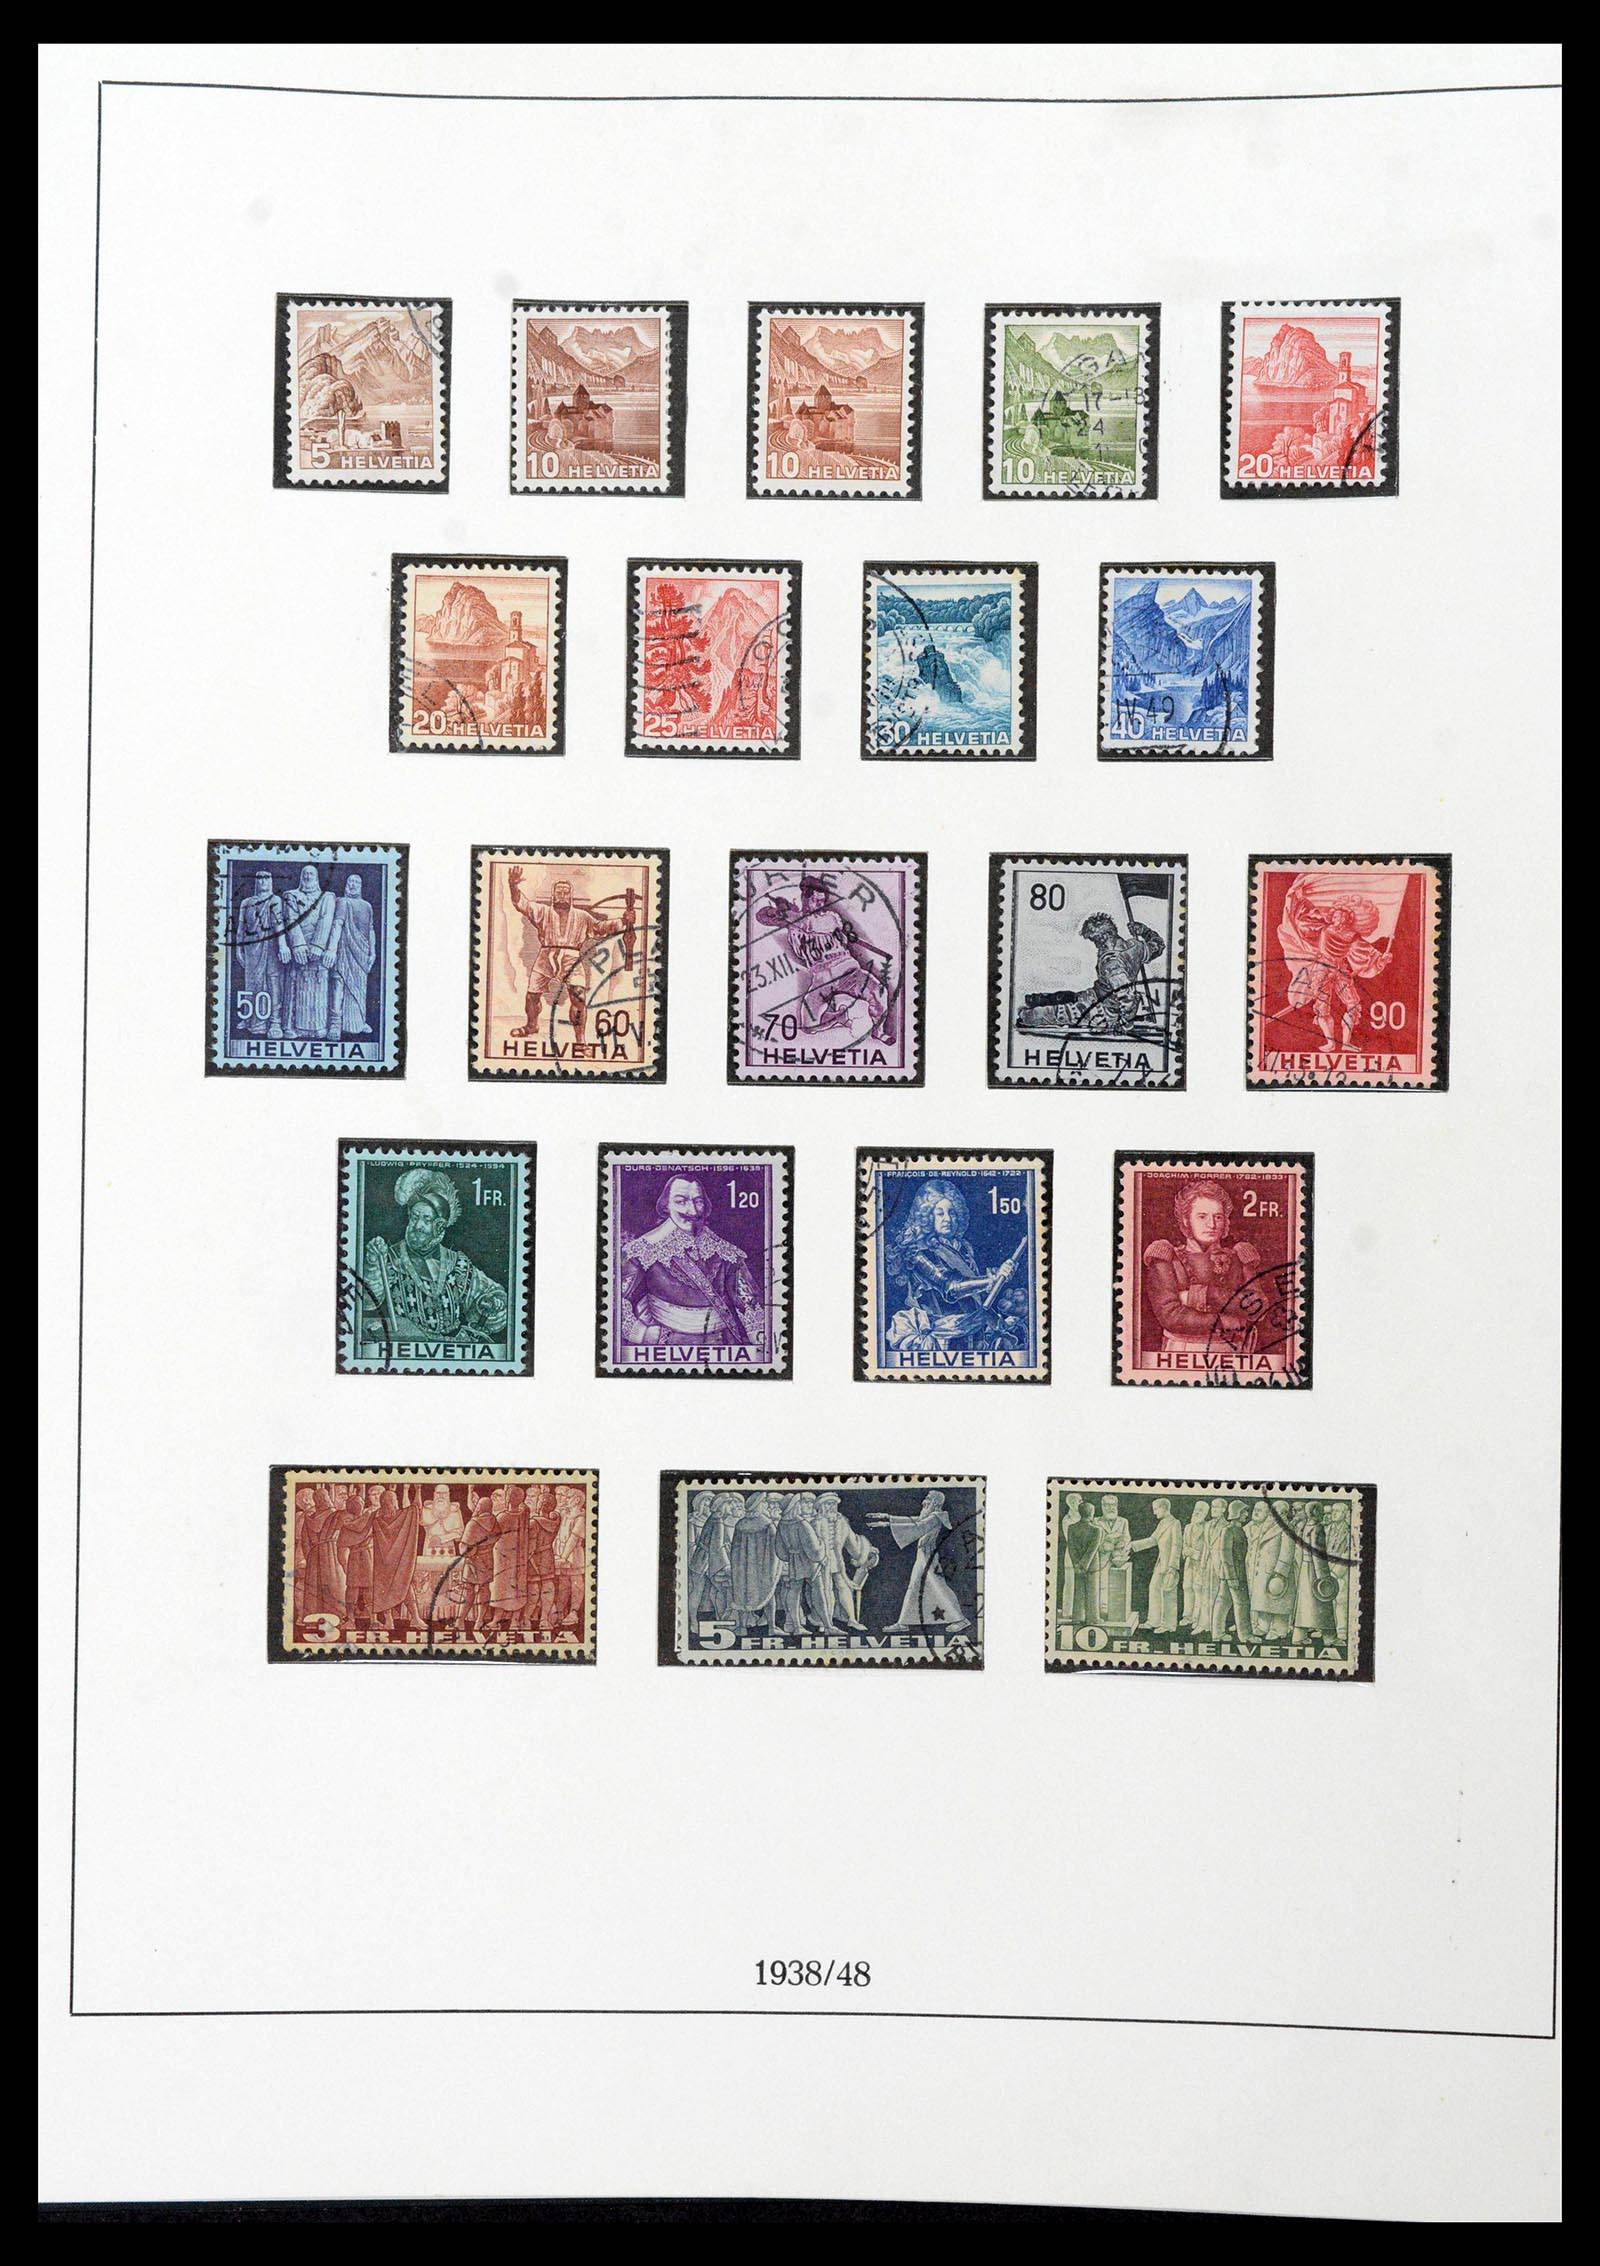 39235 0027 - Stamp collection 39235 Switzerland 1843-1960.